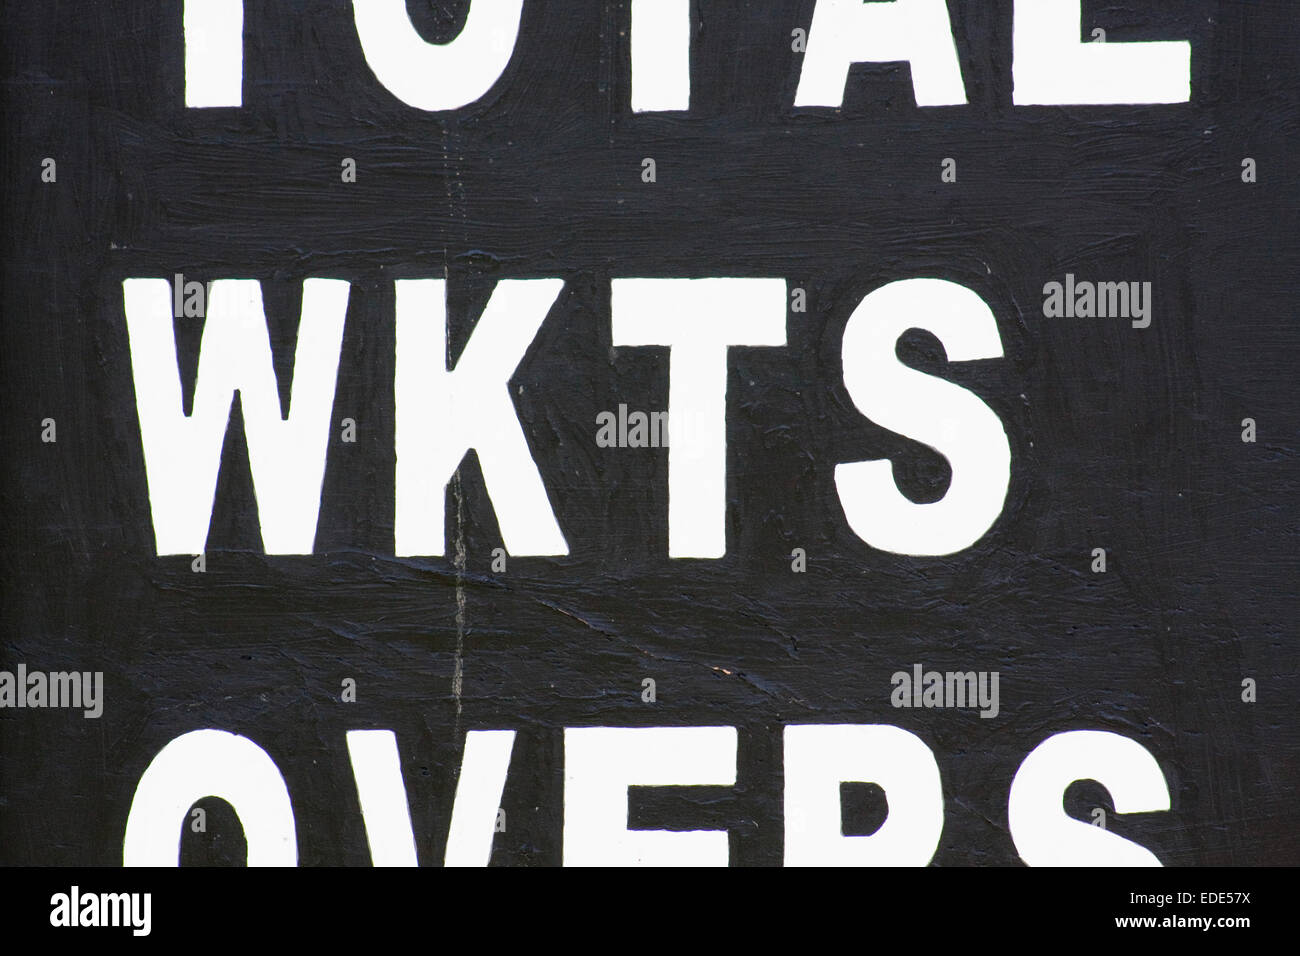 WKTS on a cricket scoreboard Stock Photo